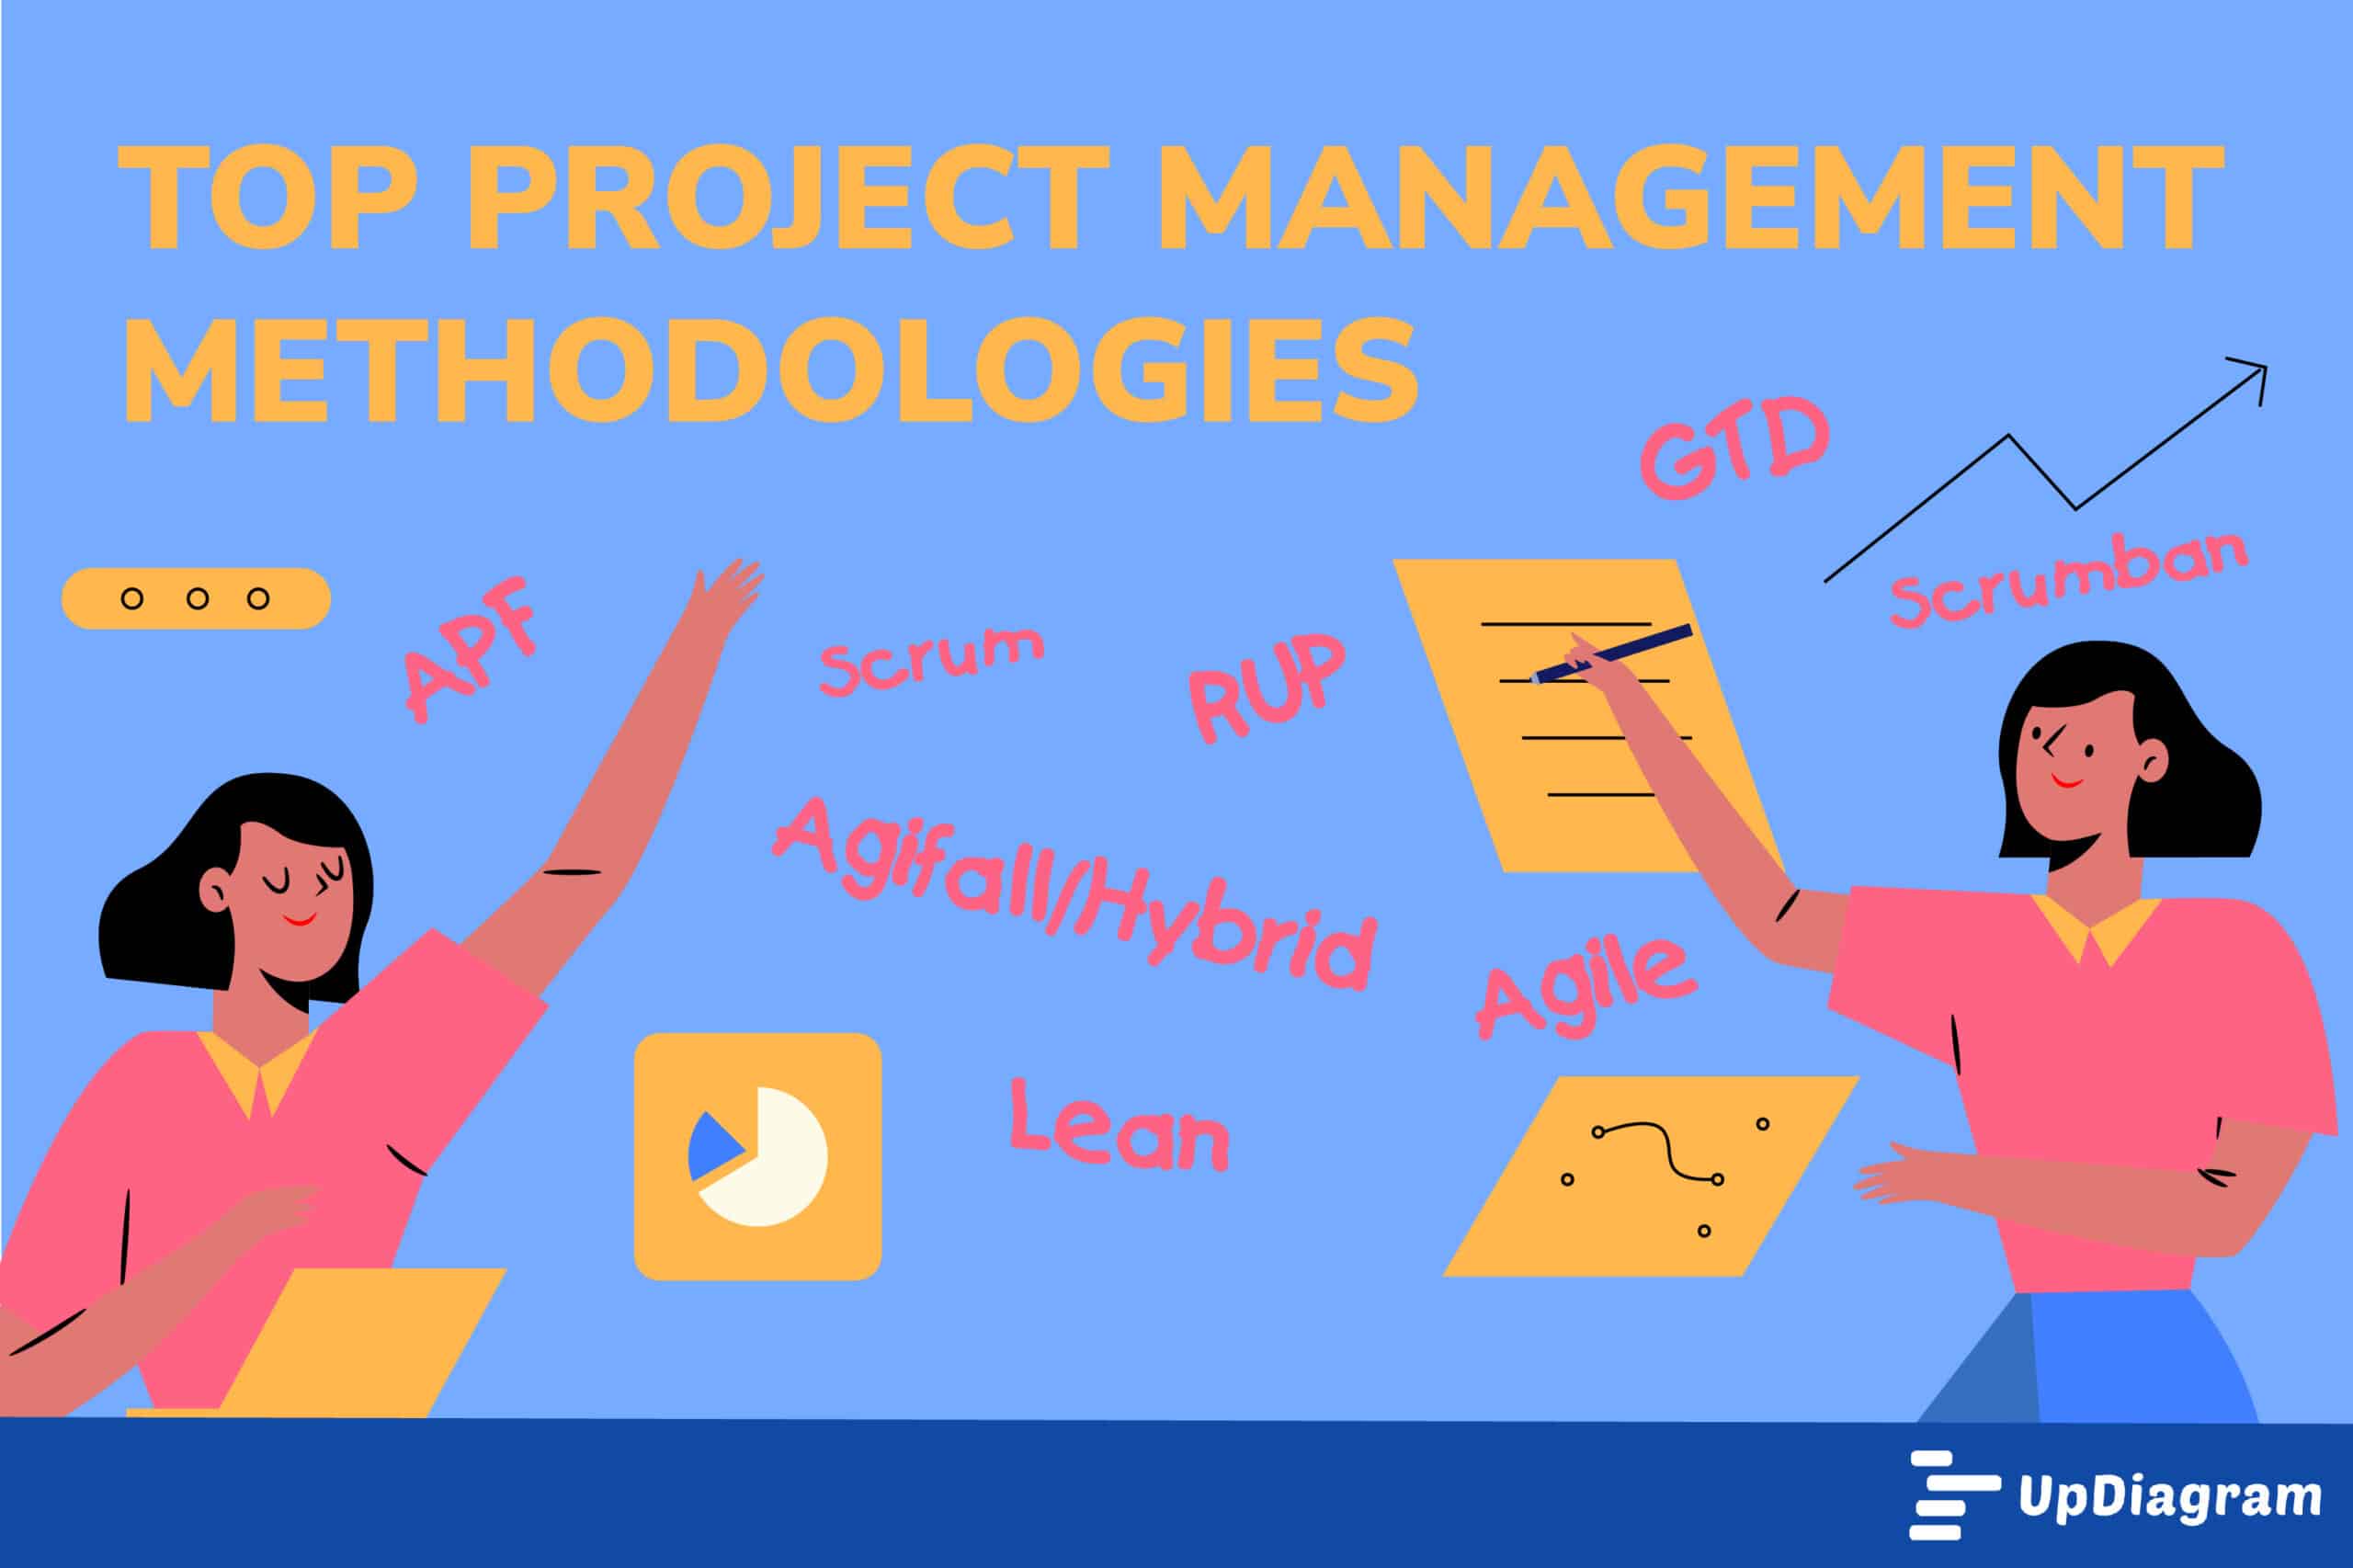 Top Project Management Methodologies